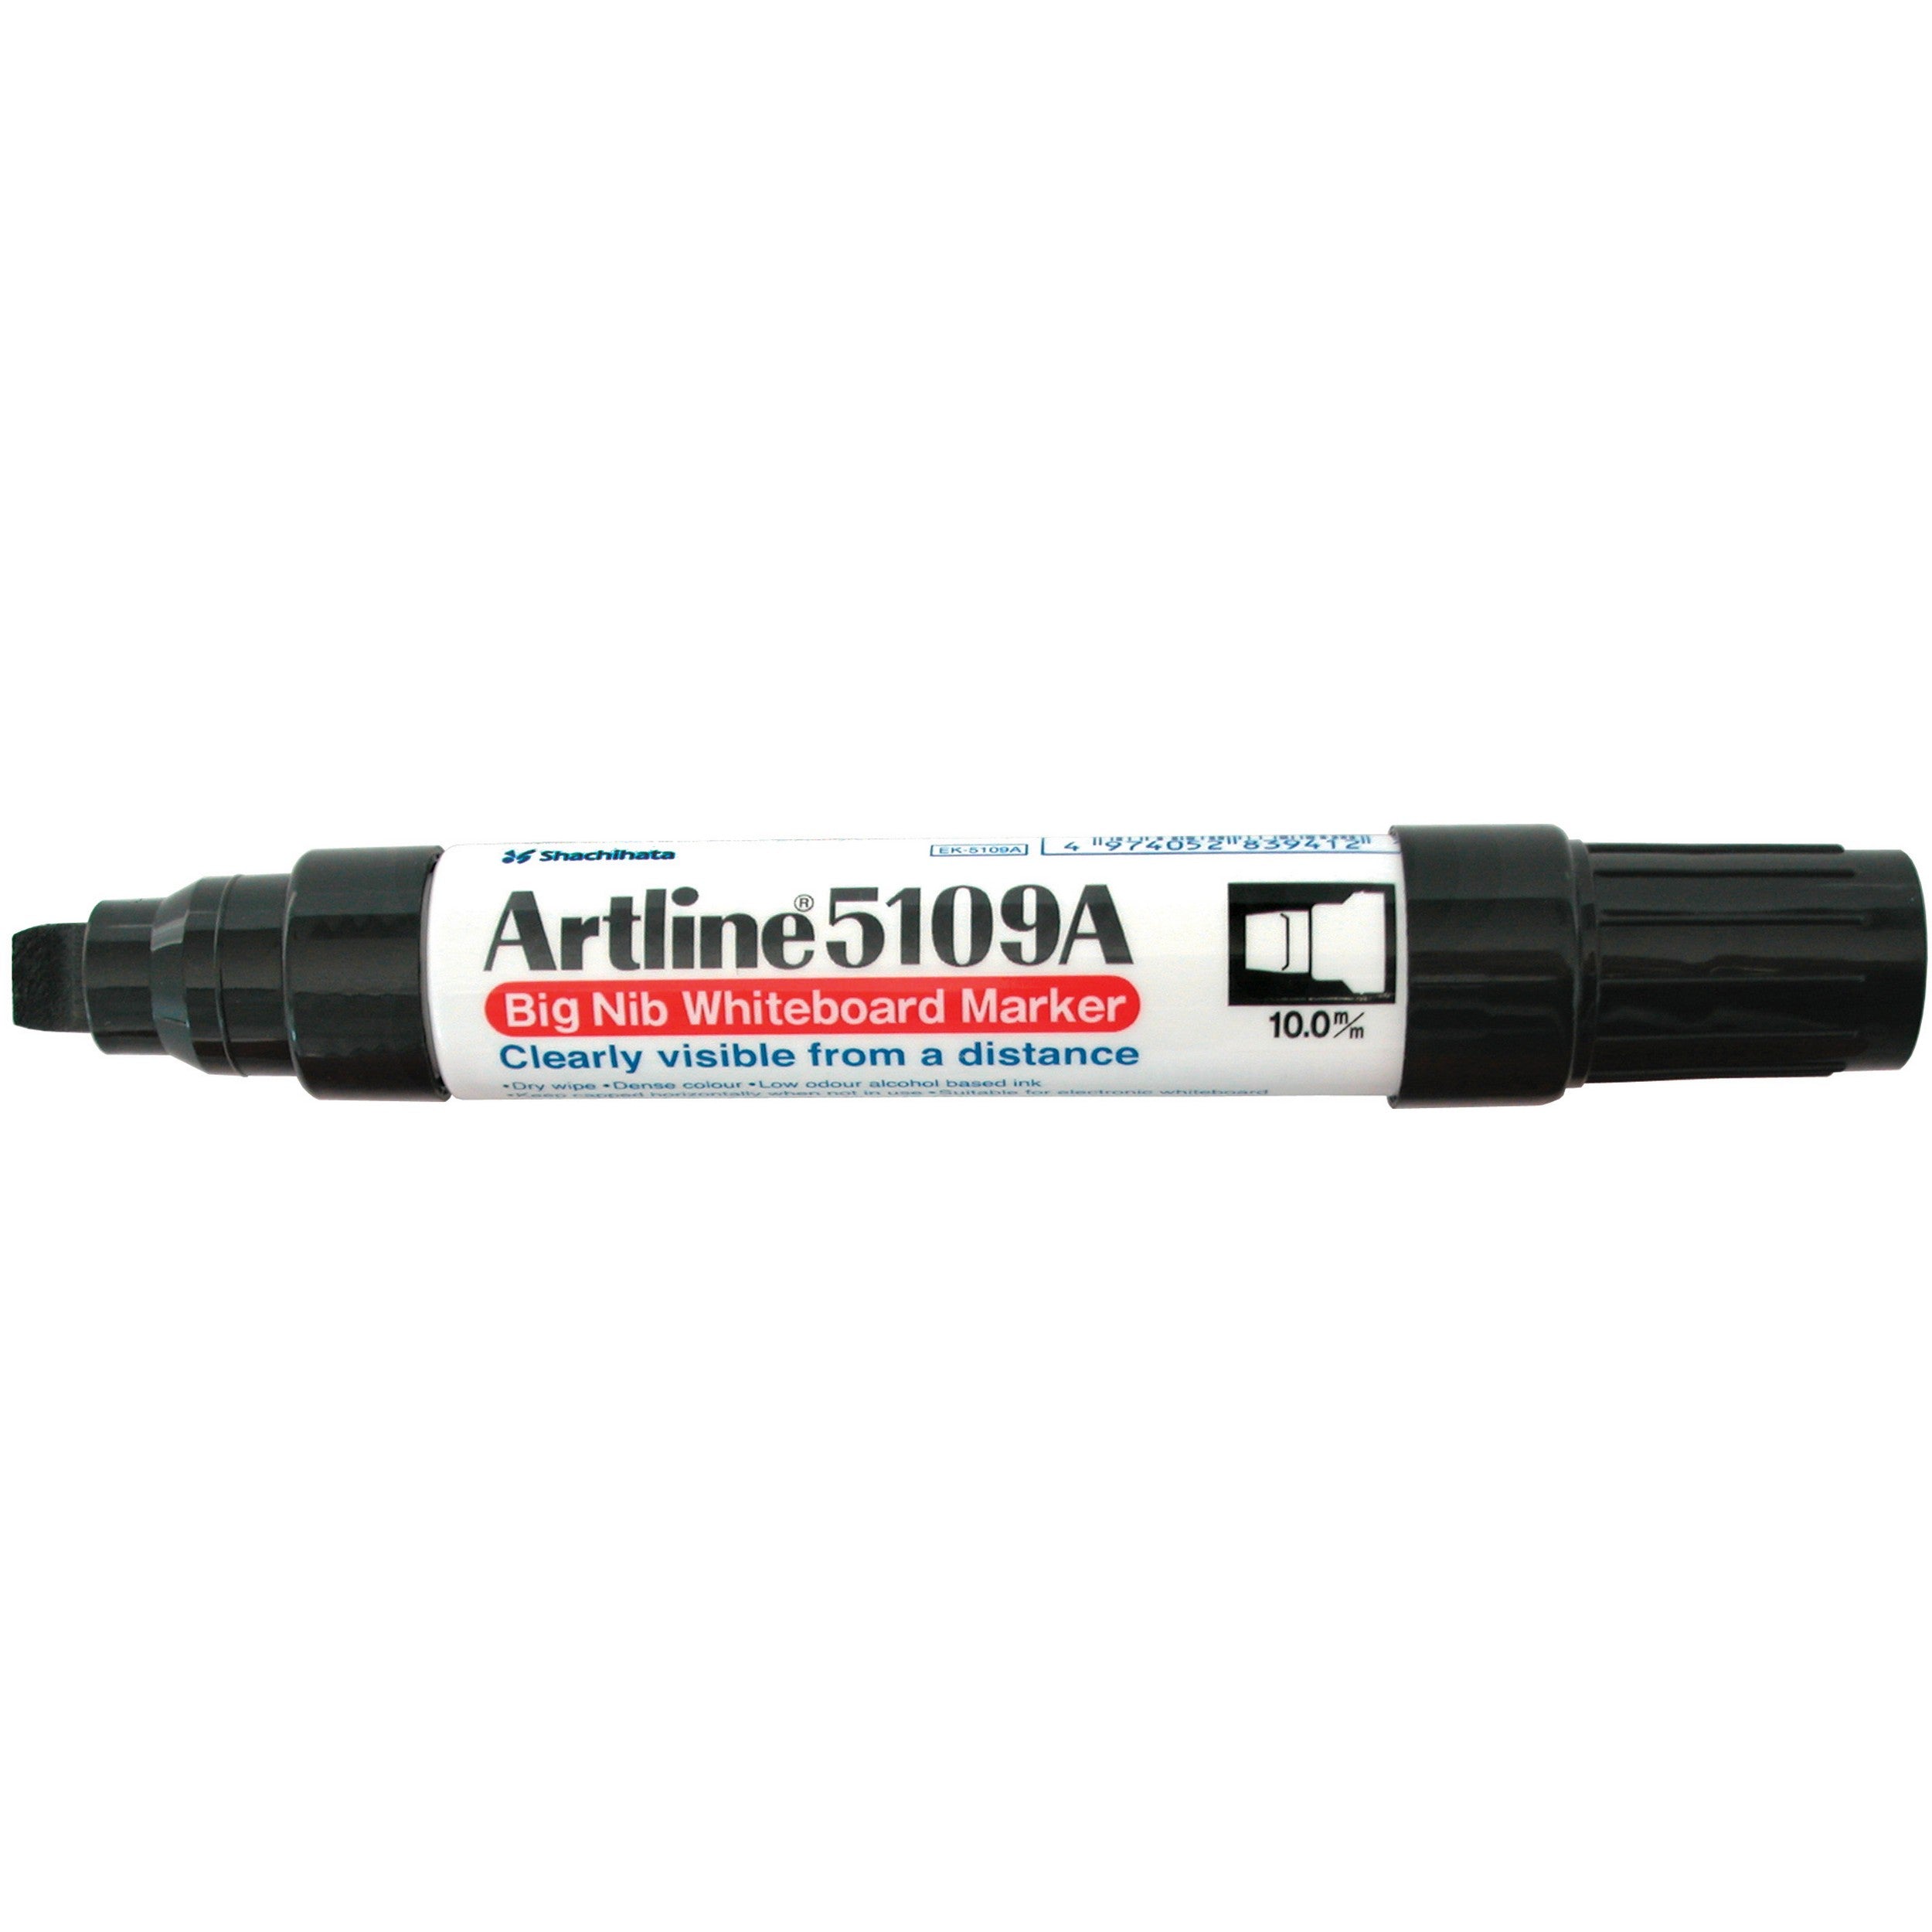 Artline 5109A Big Nib Whiteboard Marker, black, lid off